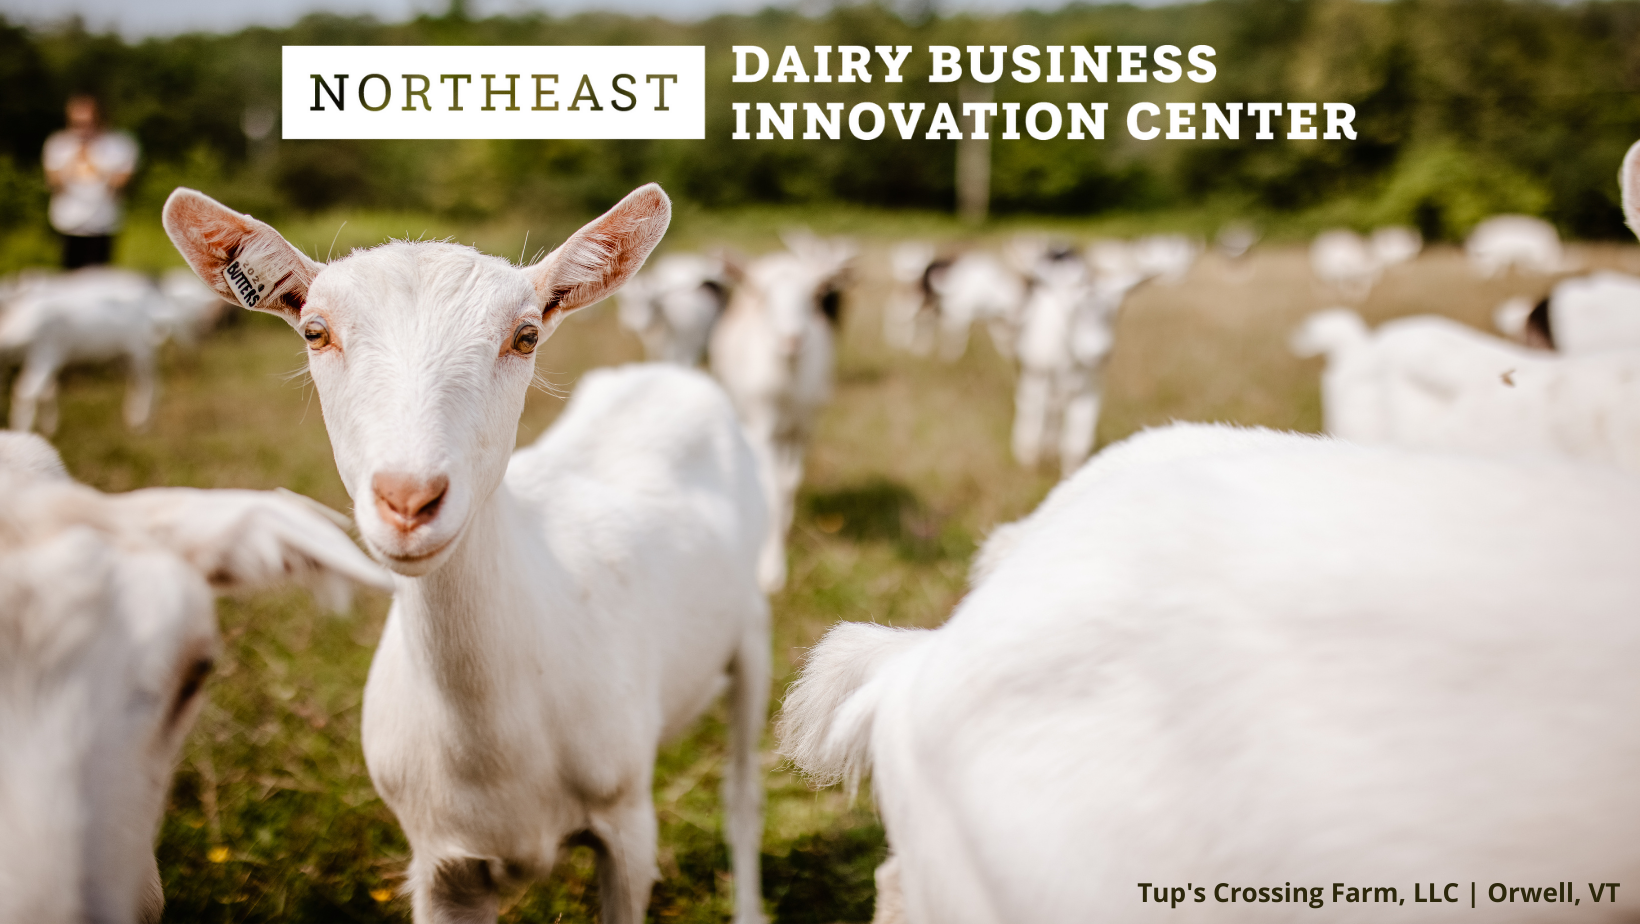 Northeast Dairy Business Innovation Center